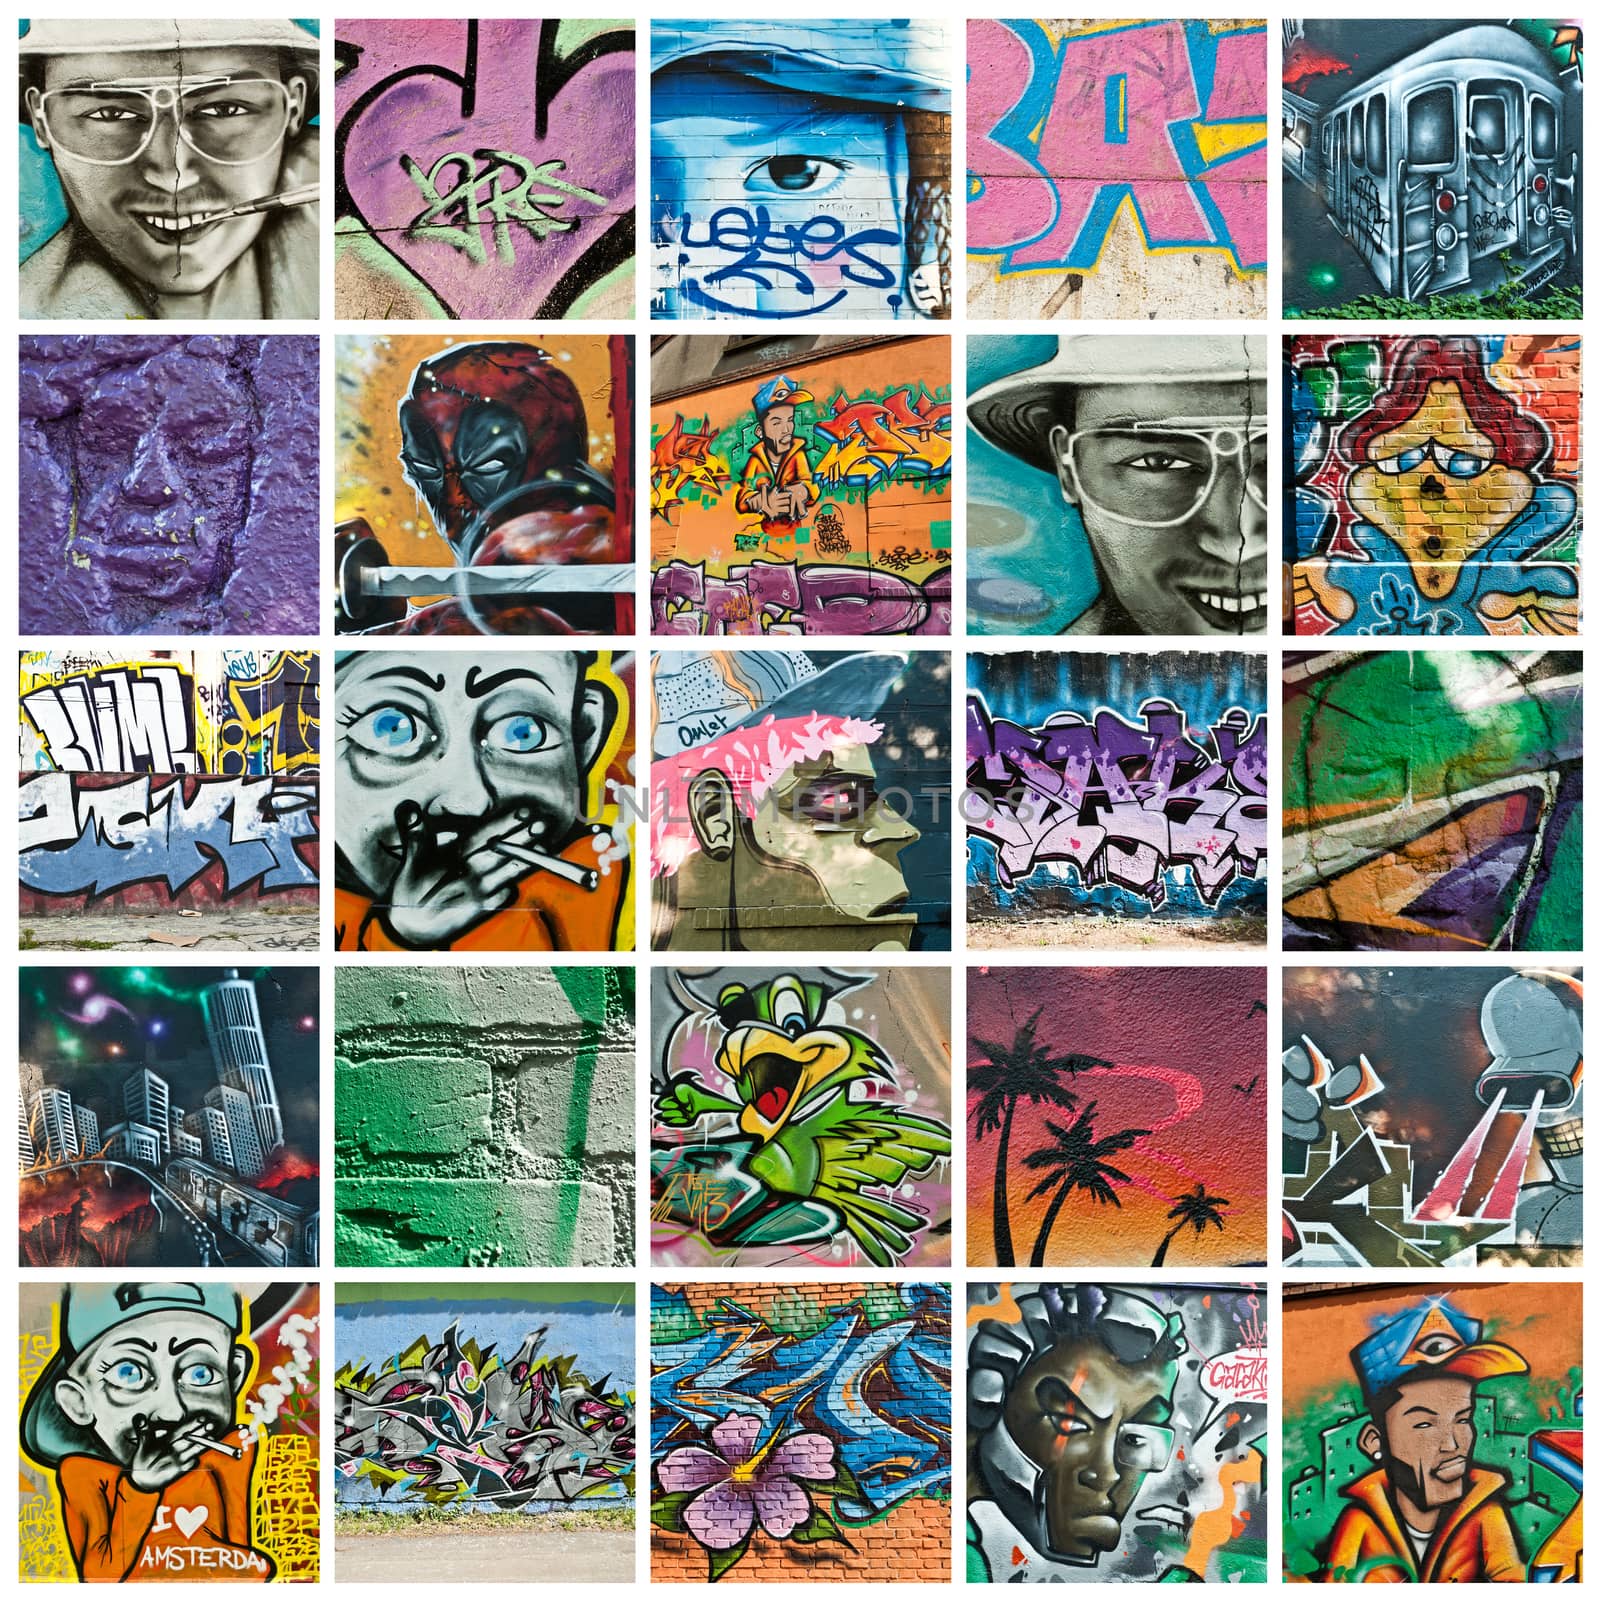 urban Art street in paris - graffiti collage